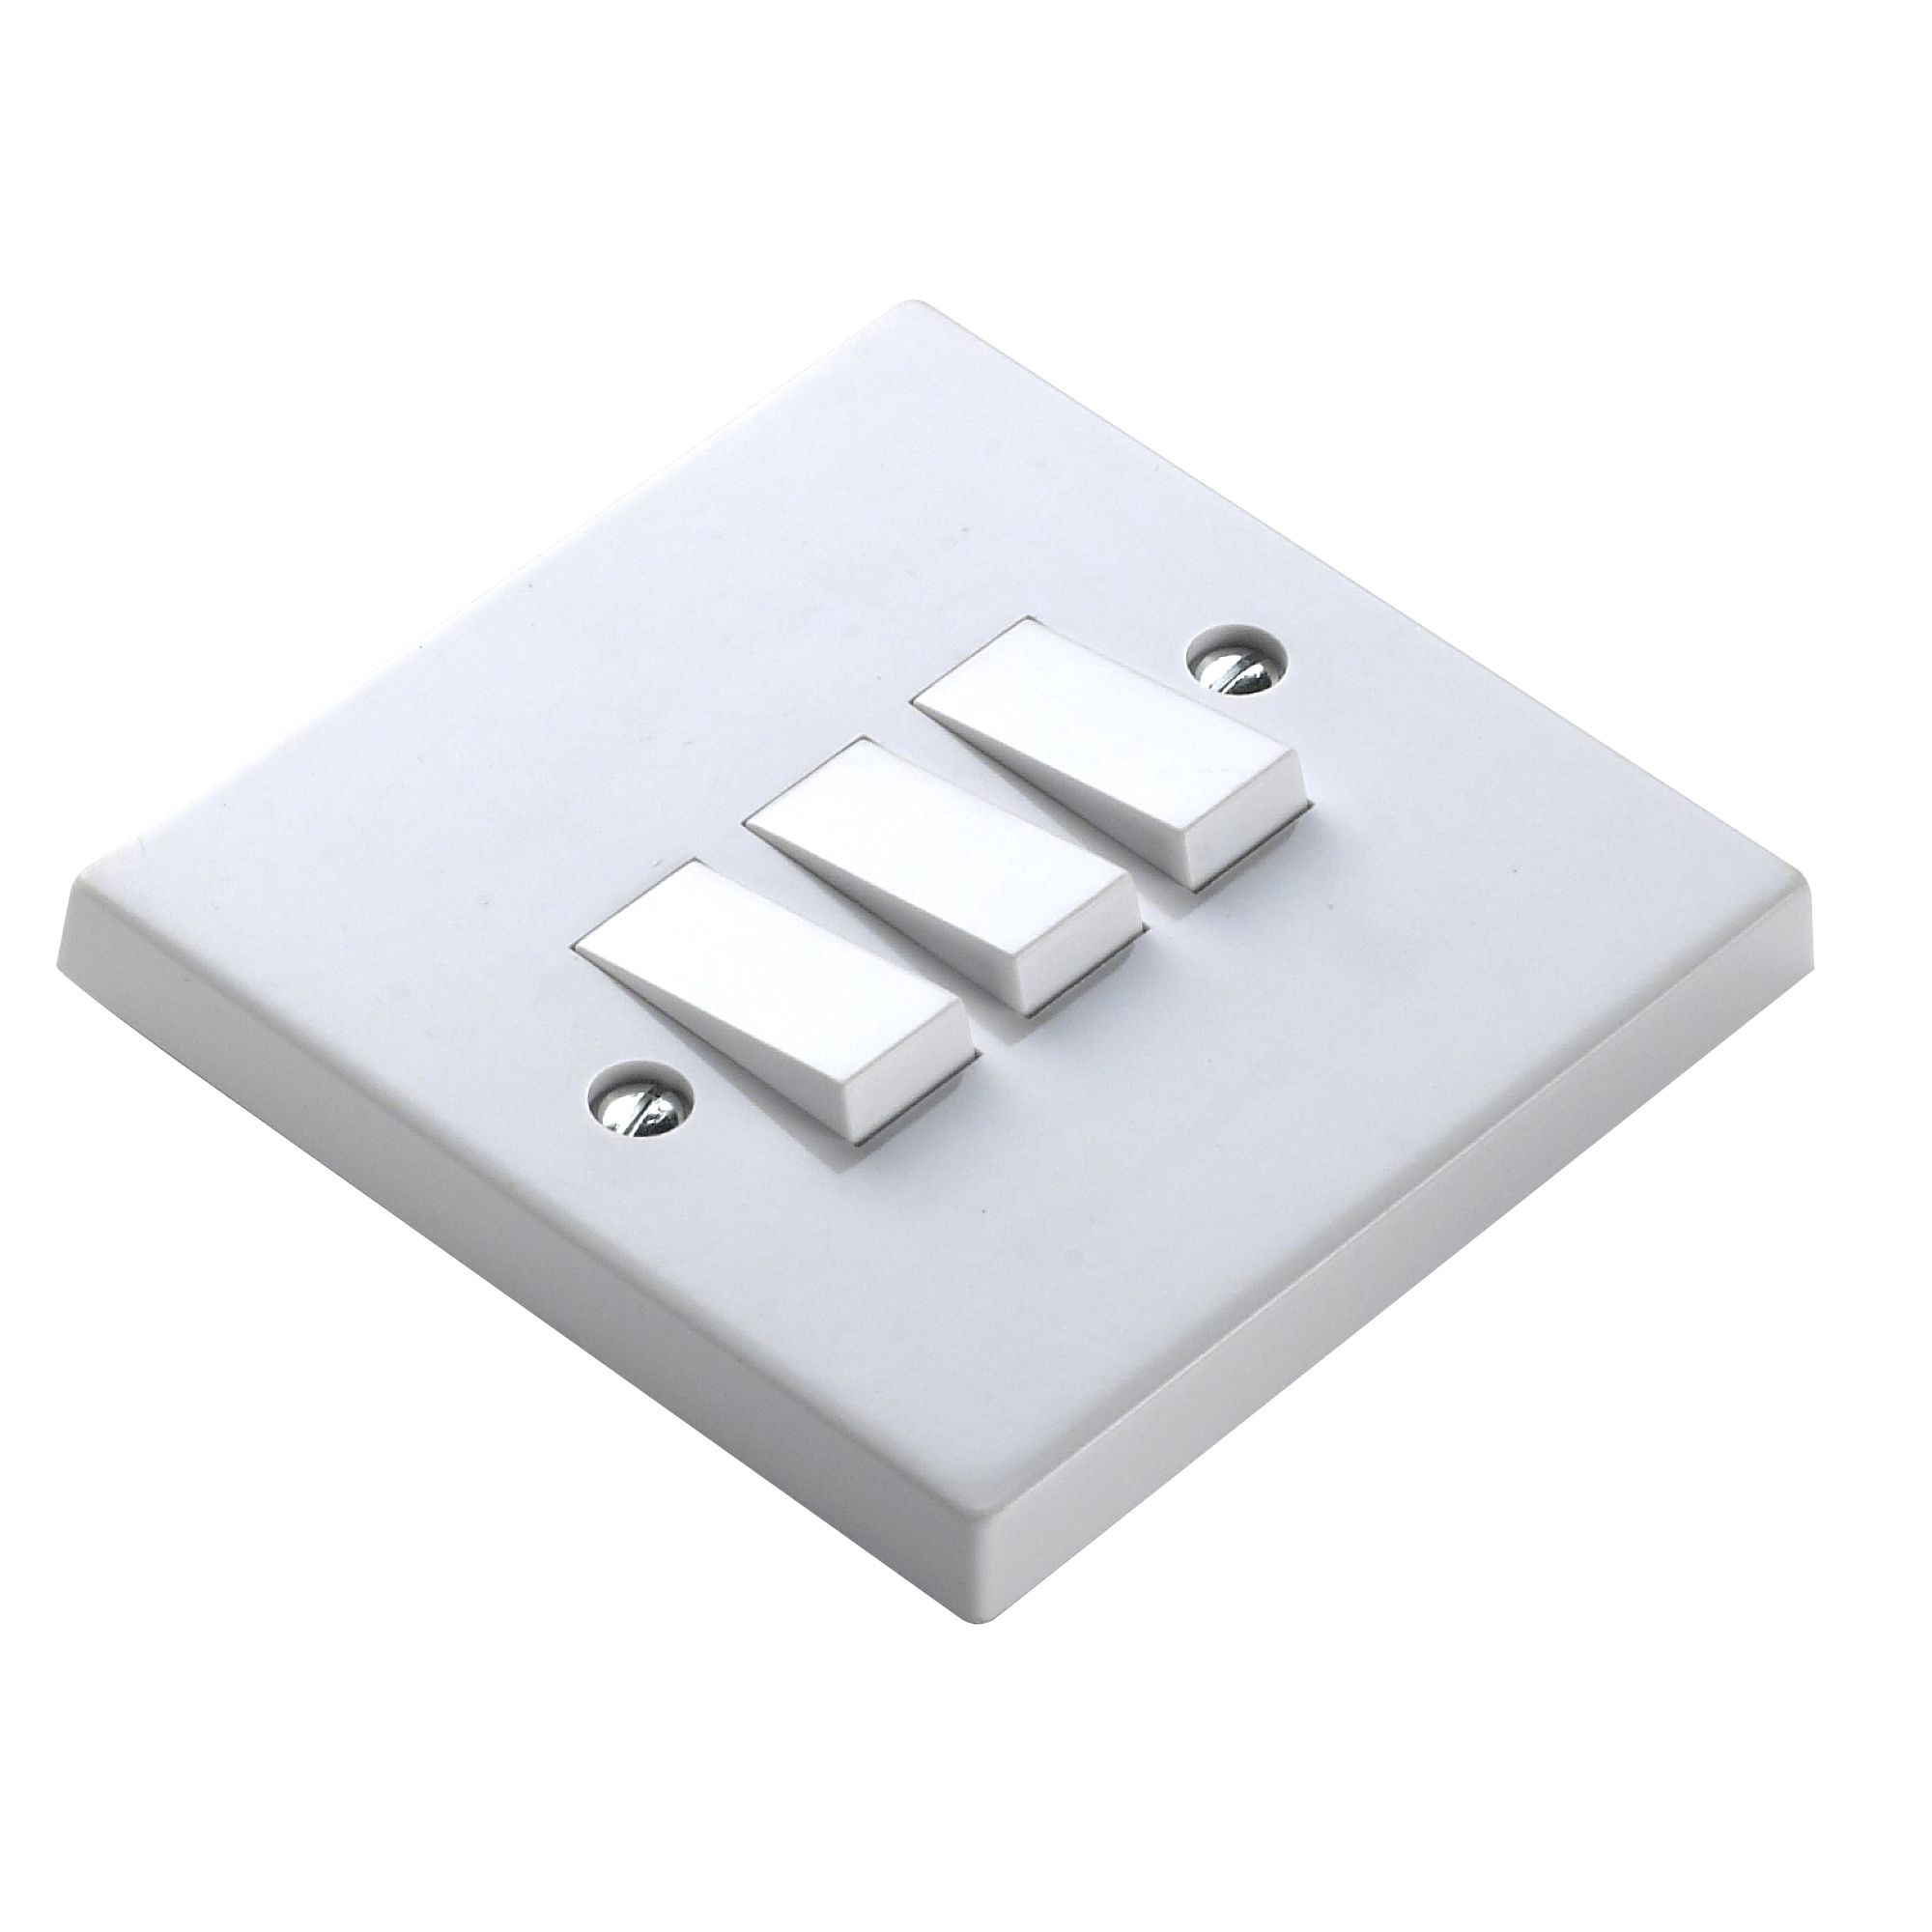 Pro Power 10A 2 way White Light Switch